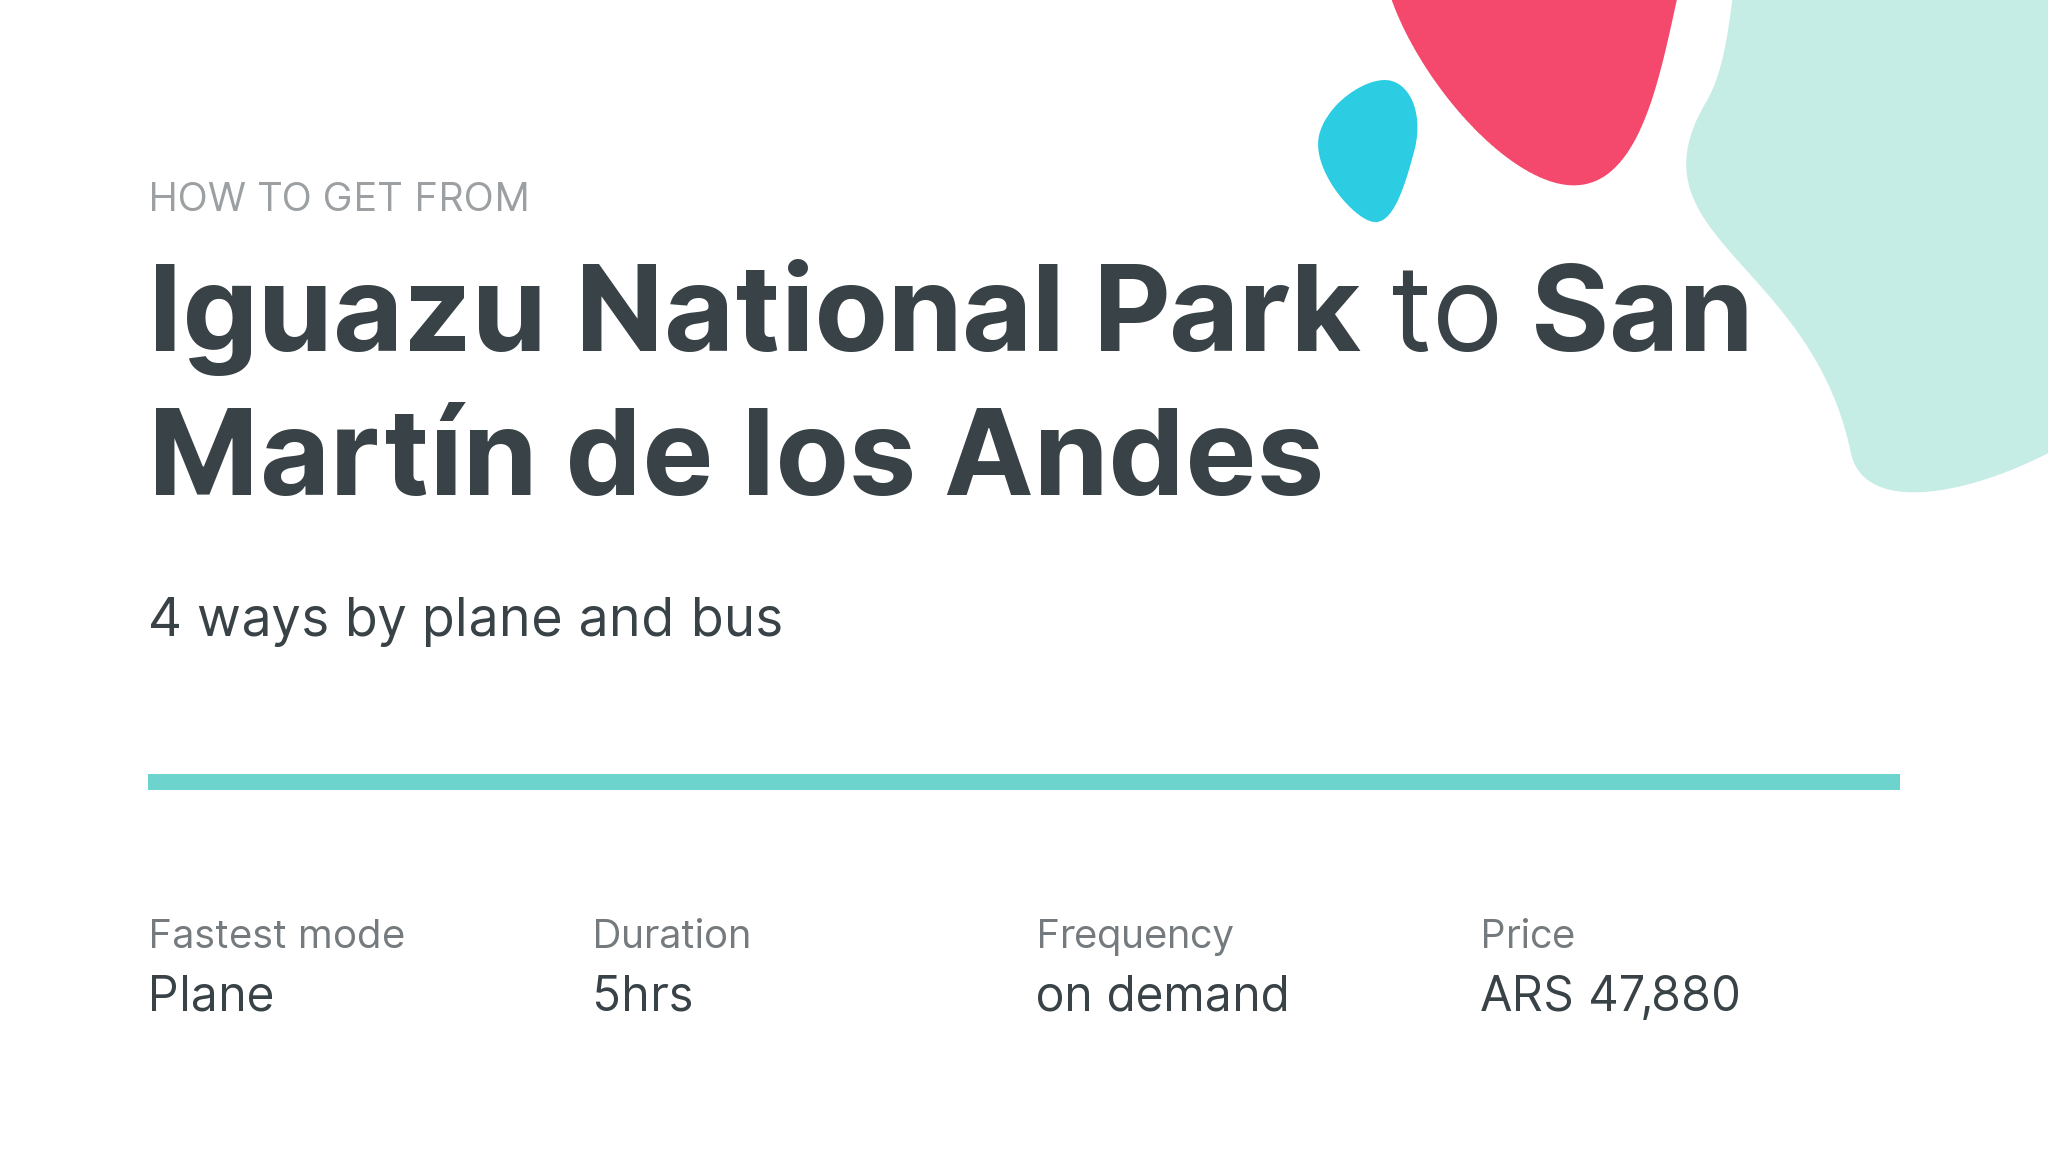 How do I get from Iguazu National Park to San Martín de los Andes